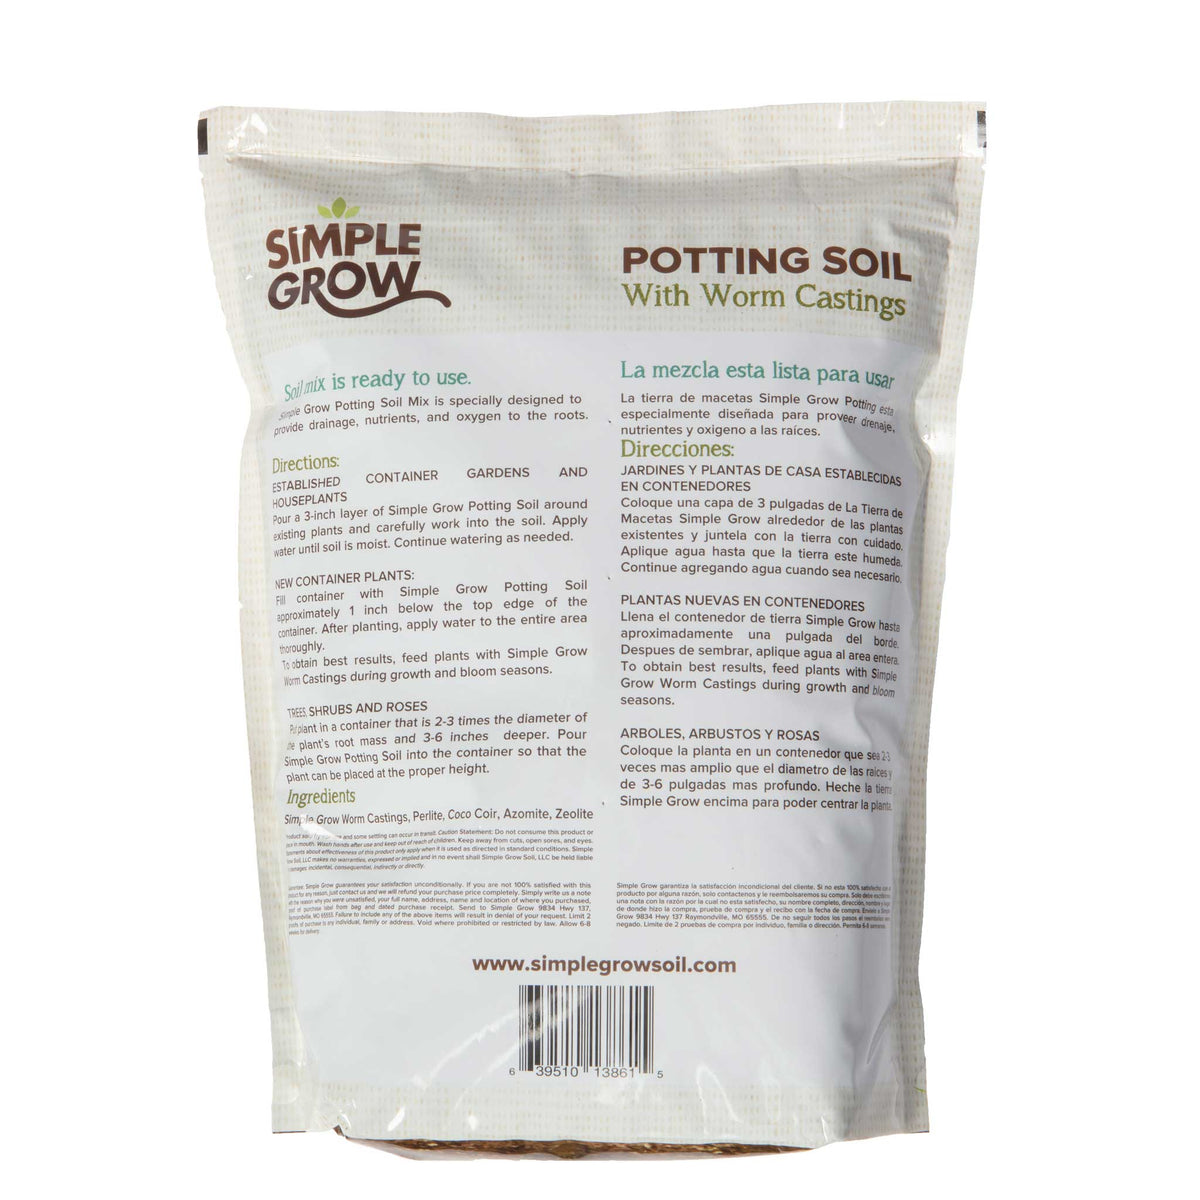 Simple Grow Potting Soil - 4 Quart Bag - simplegrowsoil